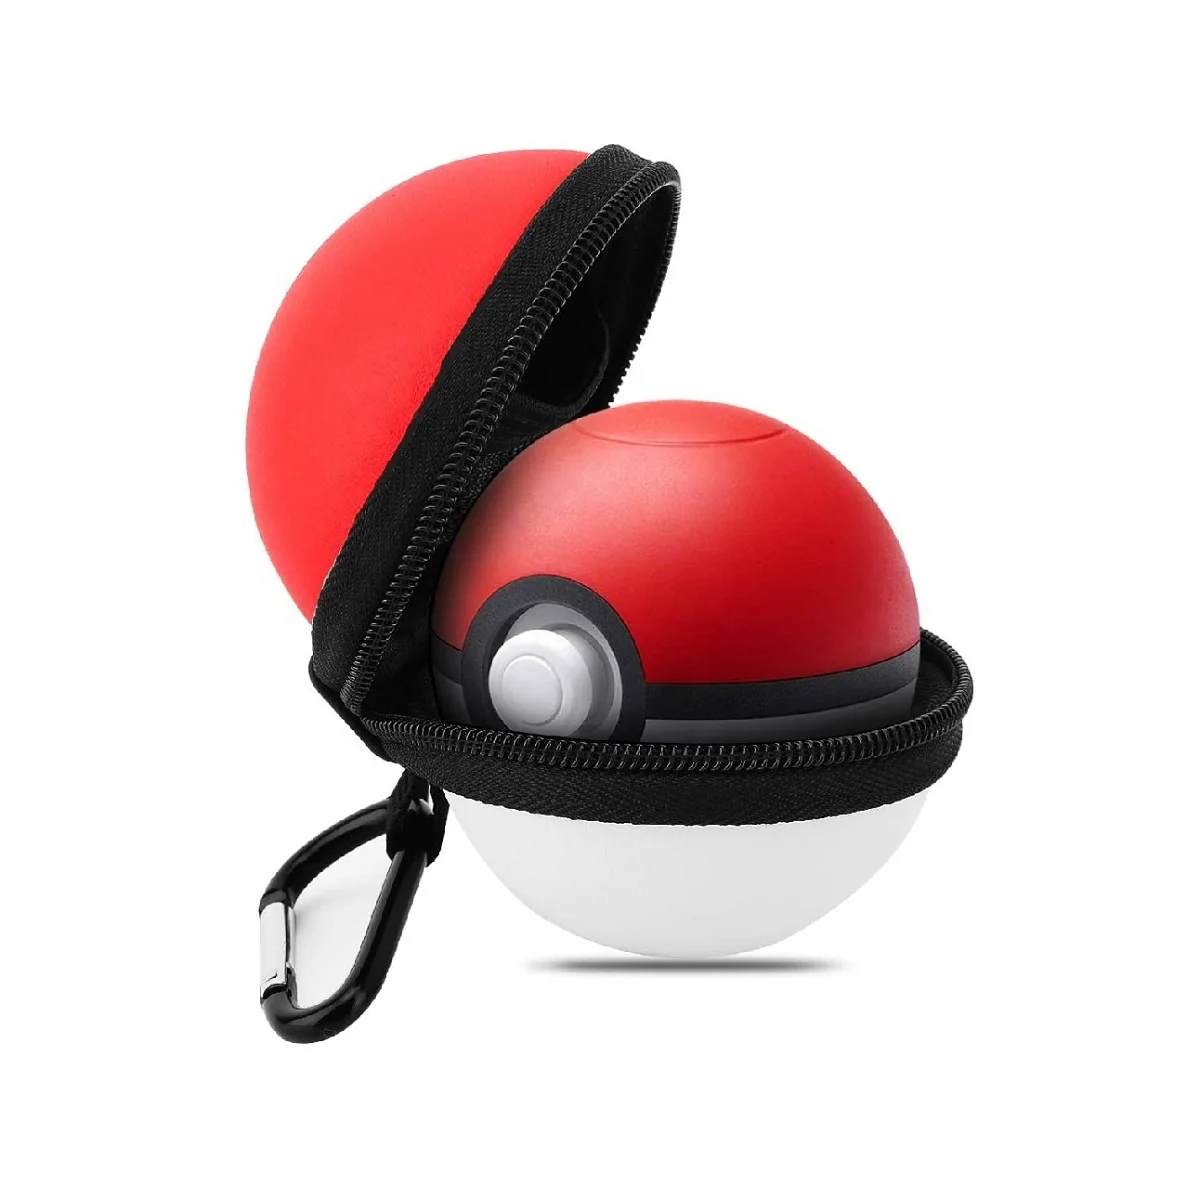 

MoKo Protective EVA Carrying Case for Nintendo Switch Pokeball Plus Controller